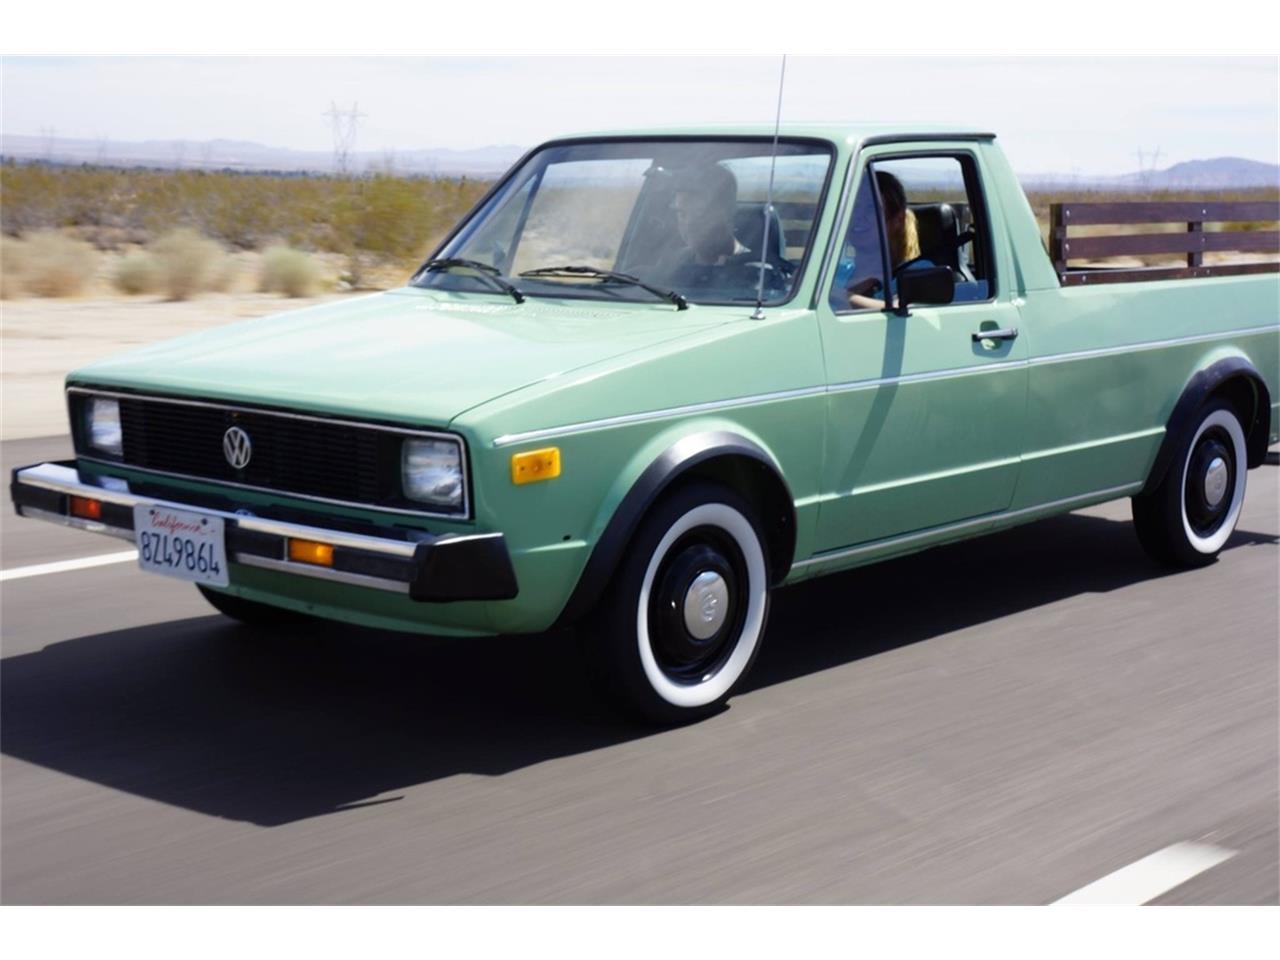 For Sale: 1980 Volkswagen Rabbit Pickup in Thousand Oaks, California.